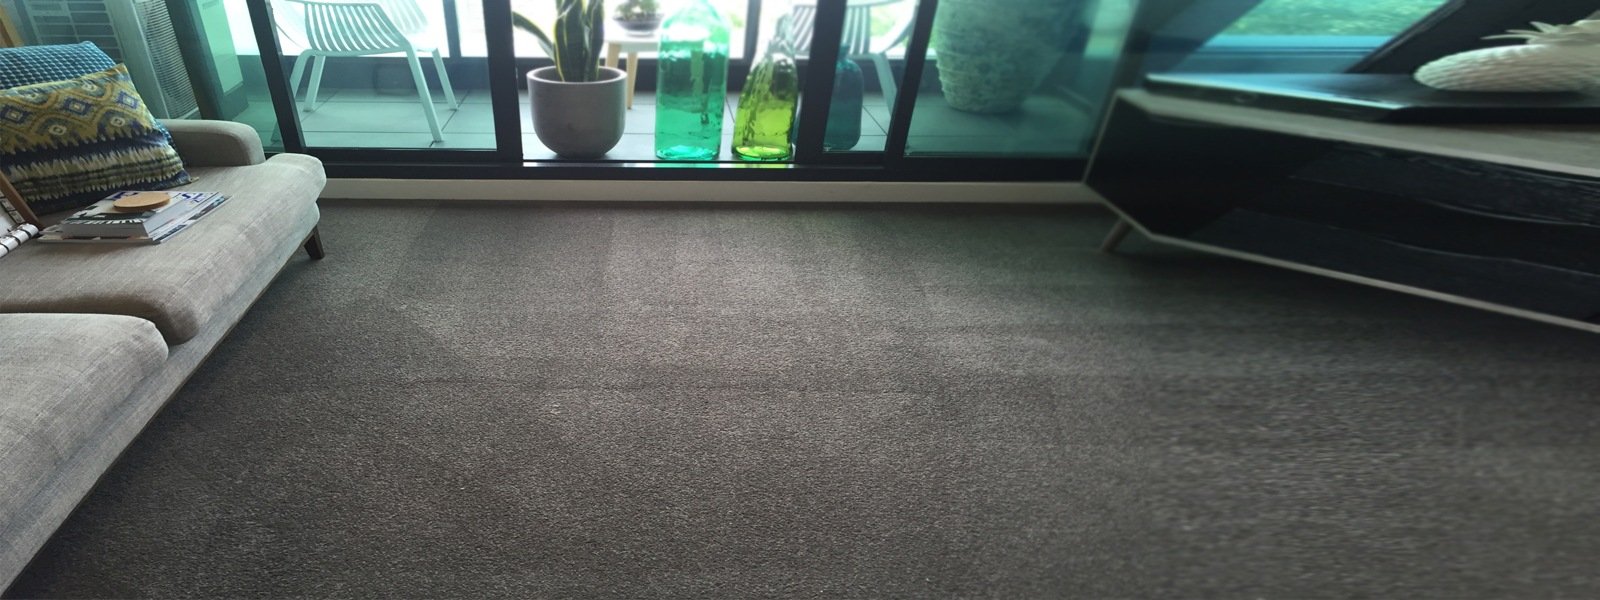 Carpet cleaning service Melbourne